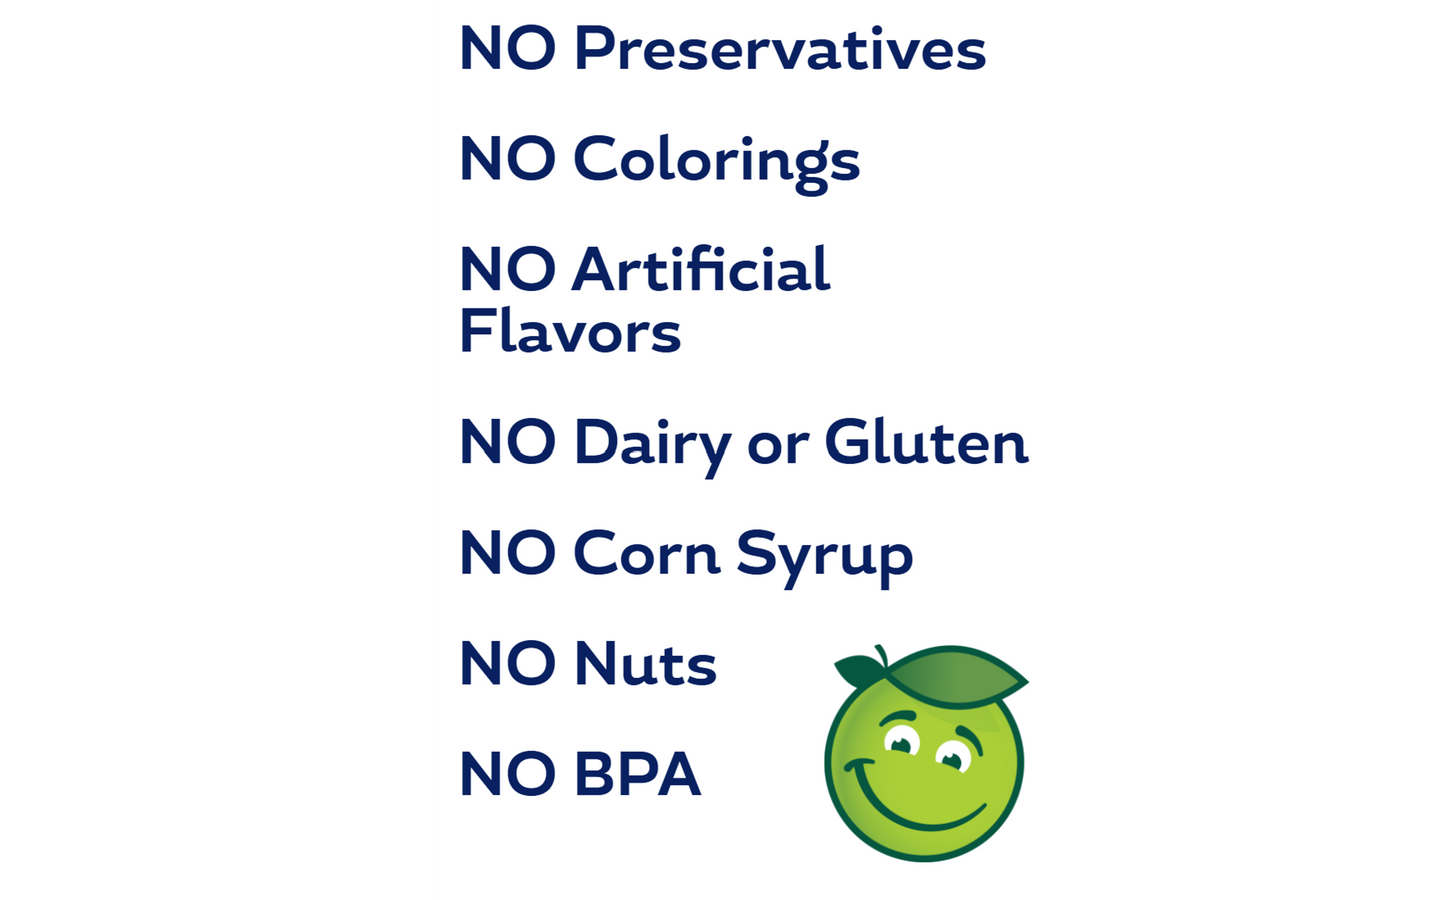 Buddy Fruits Blueberry & Apple fruit pouch has no preservatives, no colorings, no artificial flavors, no dairy, no gluten, no corn syrup, no nuts, & no BPA.